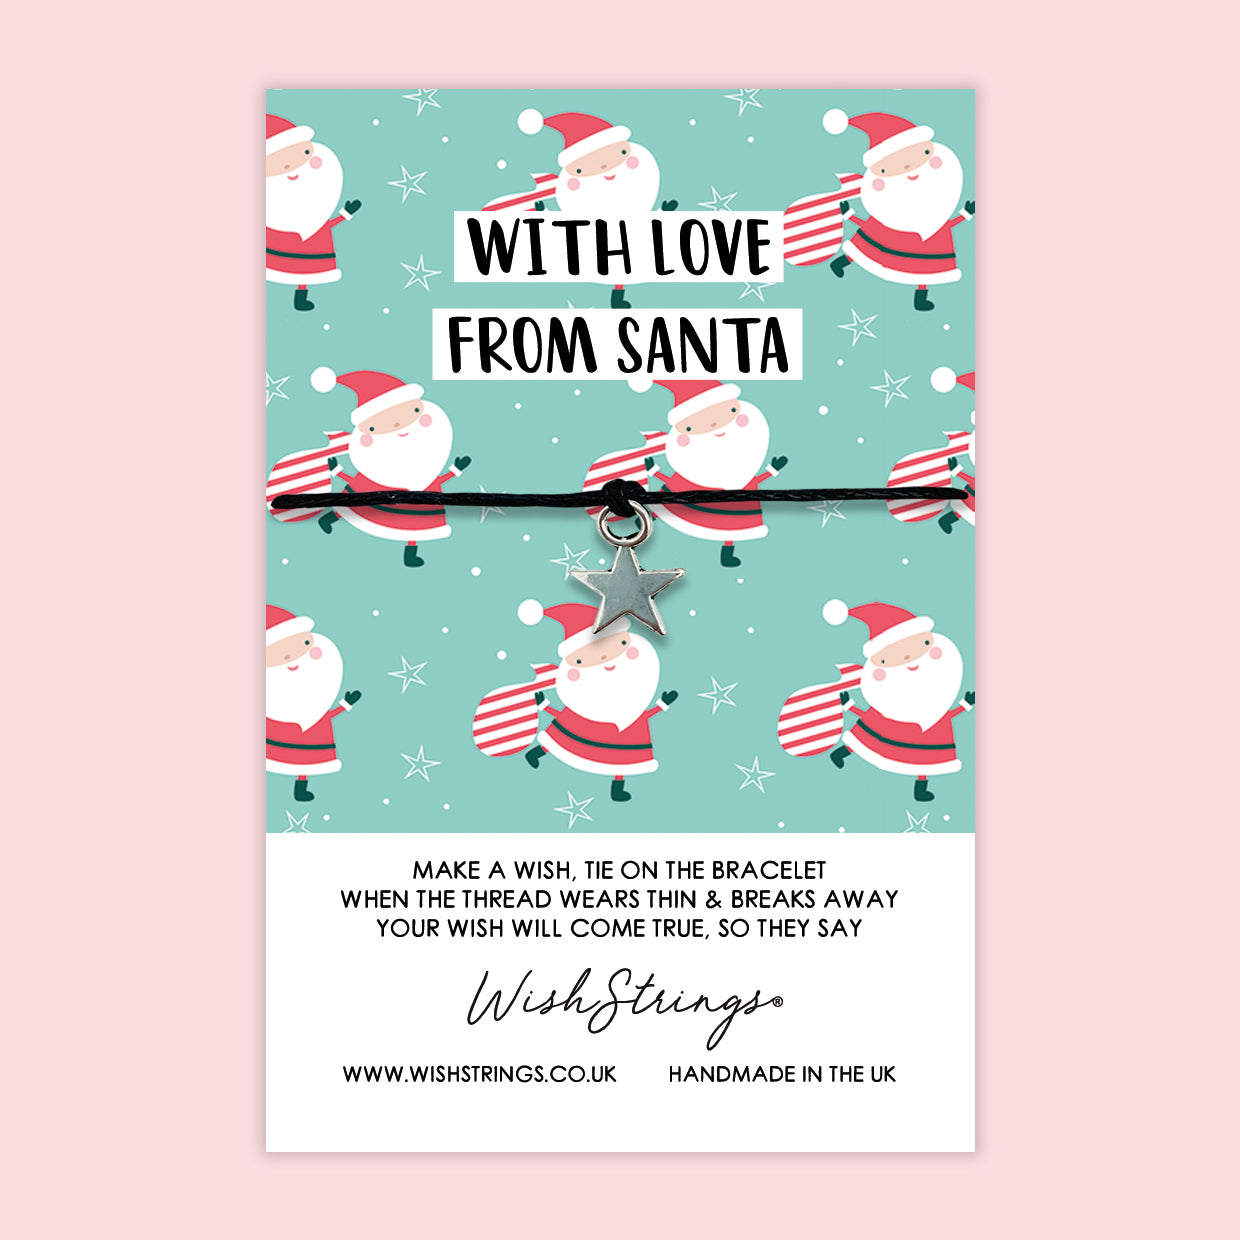 With Love from Santa - WishStrings Wish Bracelet